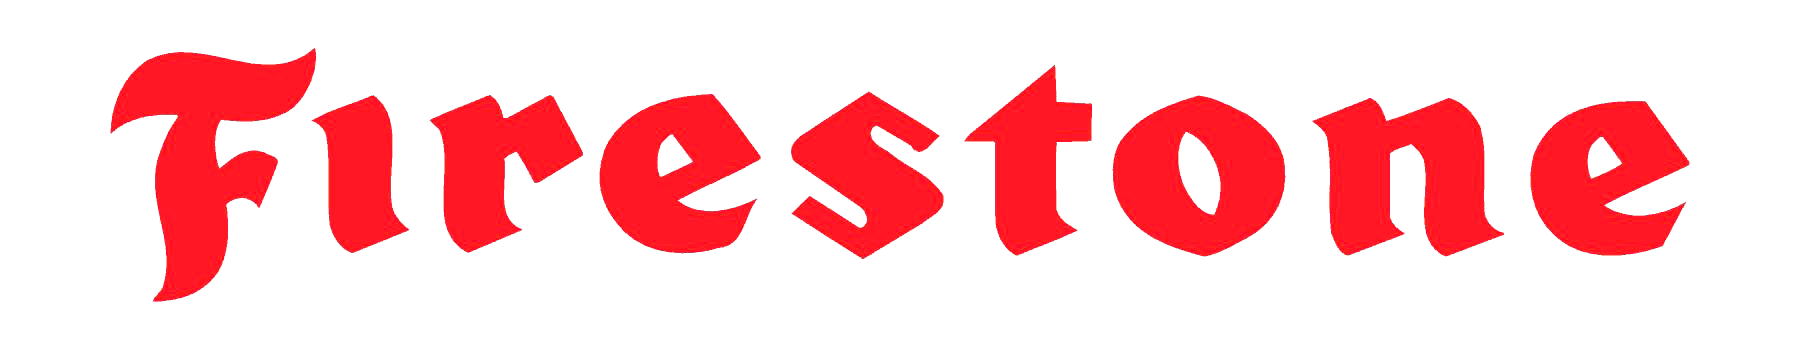 Firestone_-_logo